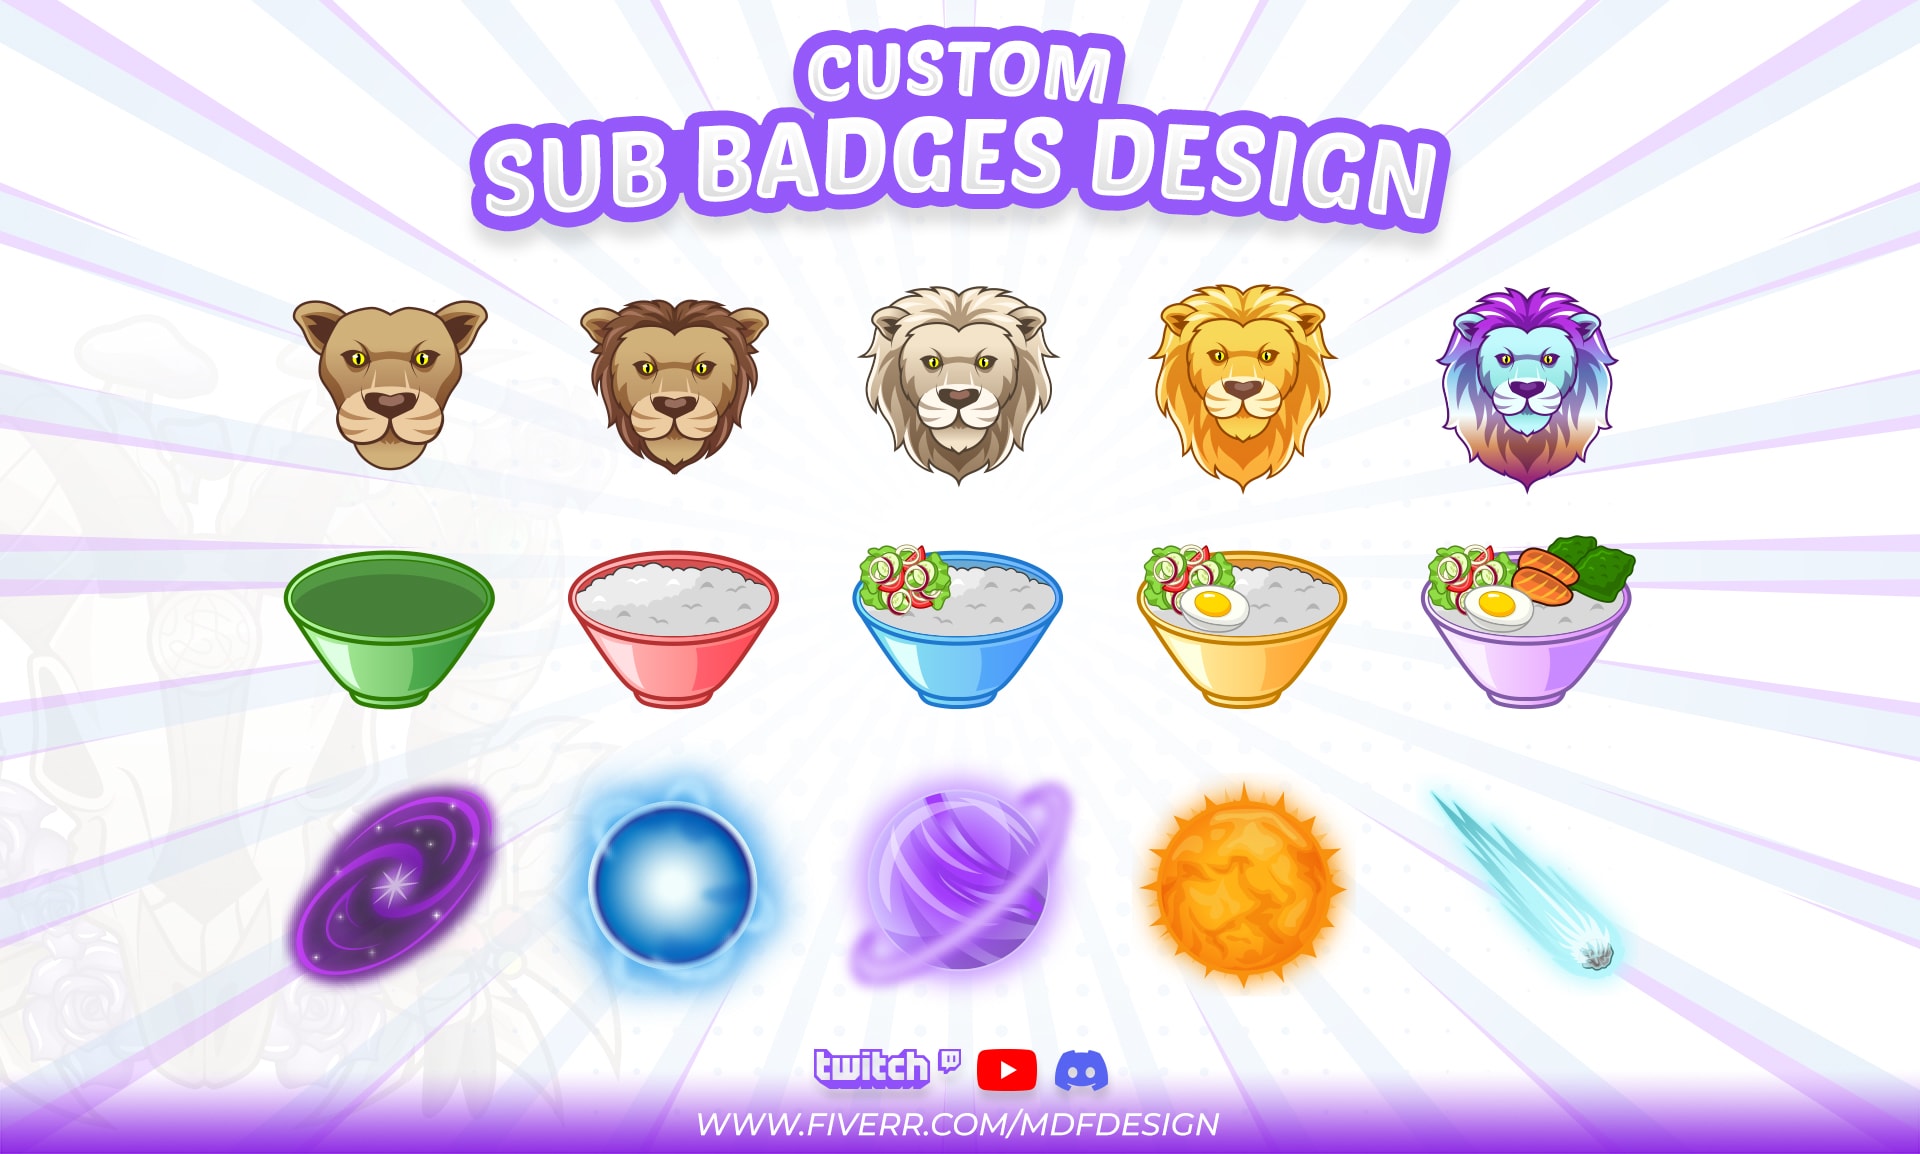 Custom Twitch Sub & Bit Badges by Veendy on Dribbble